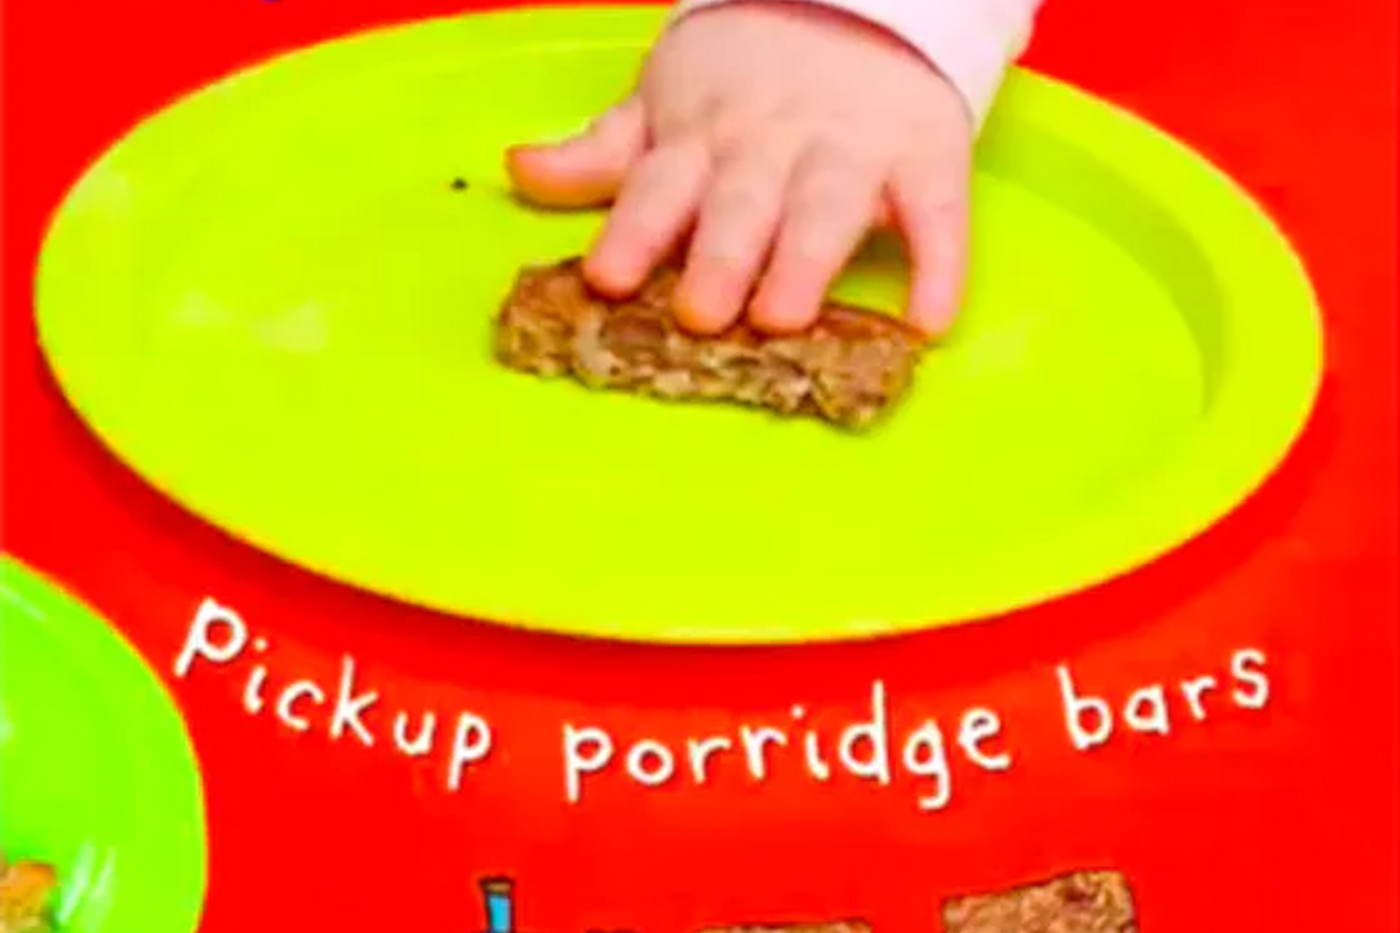 Pick up porridge bars